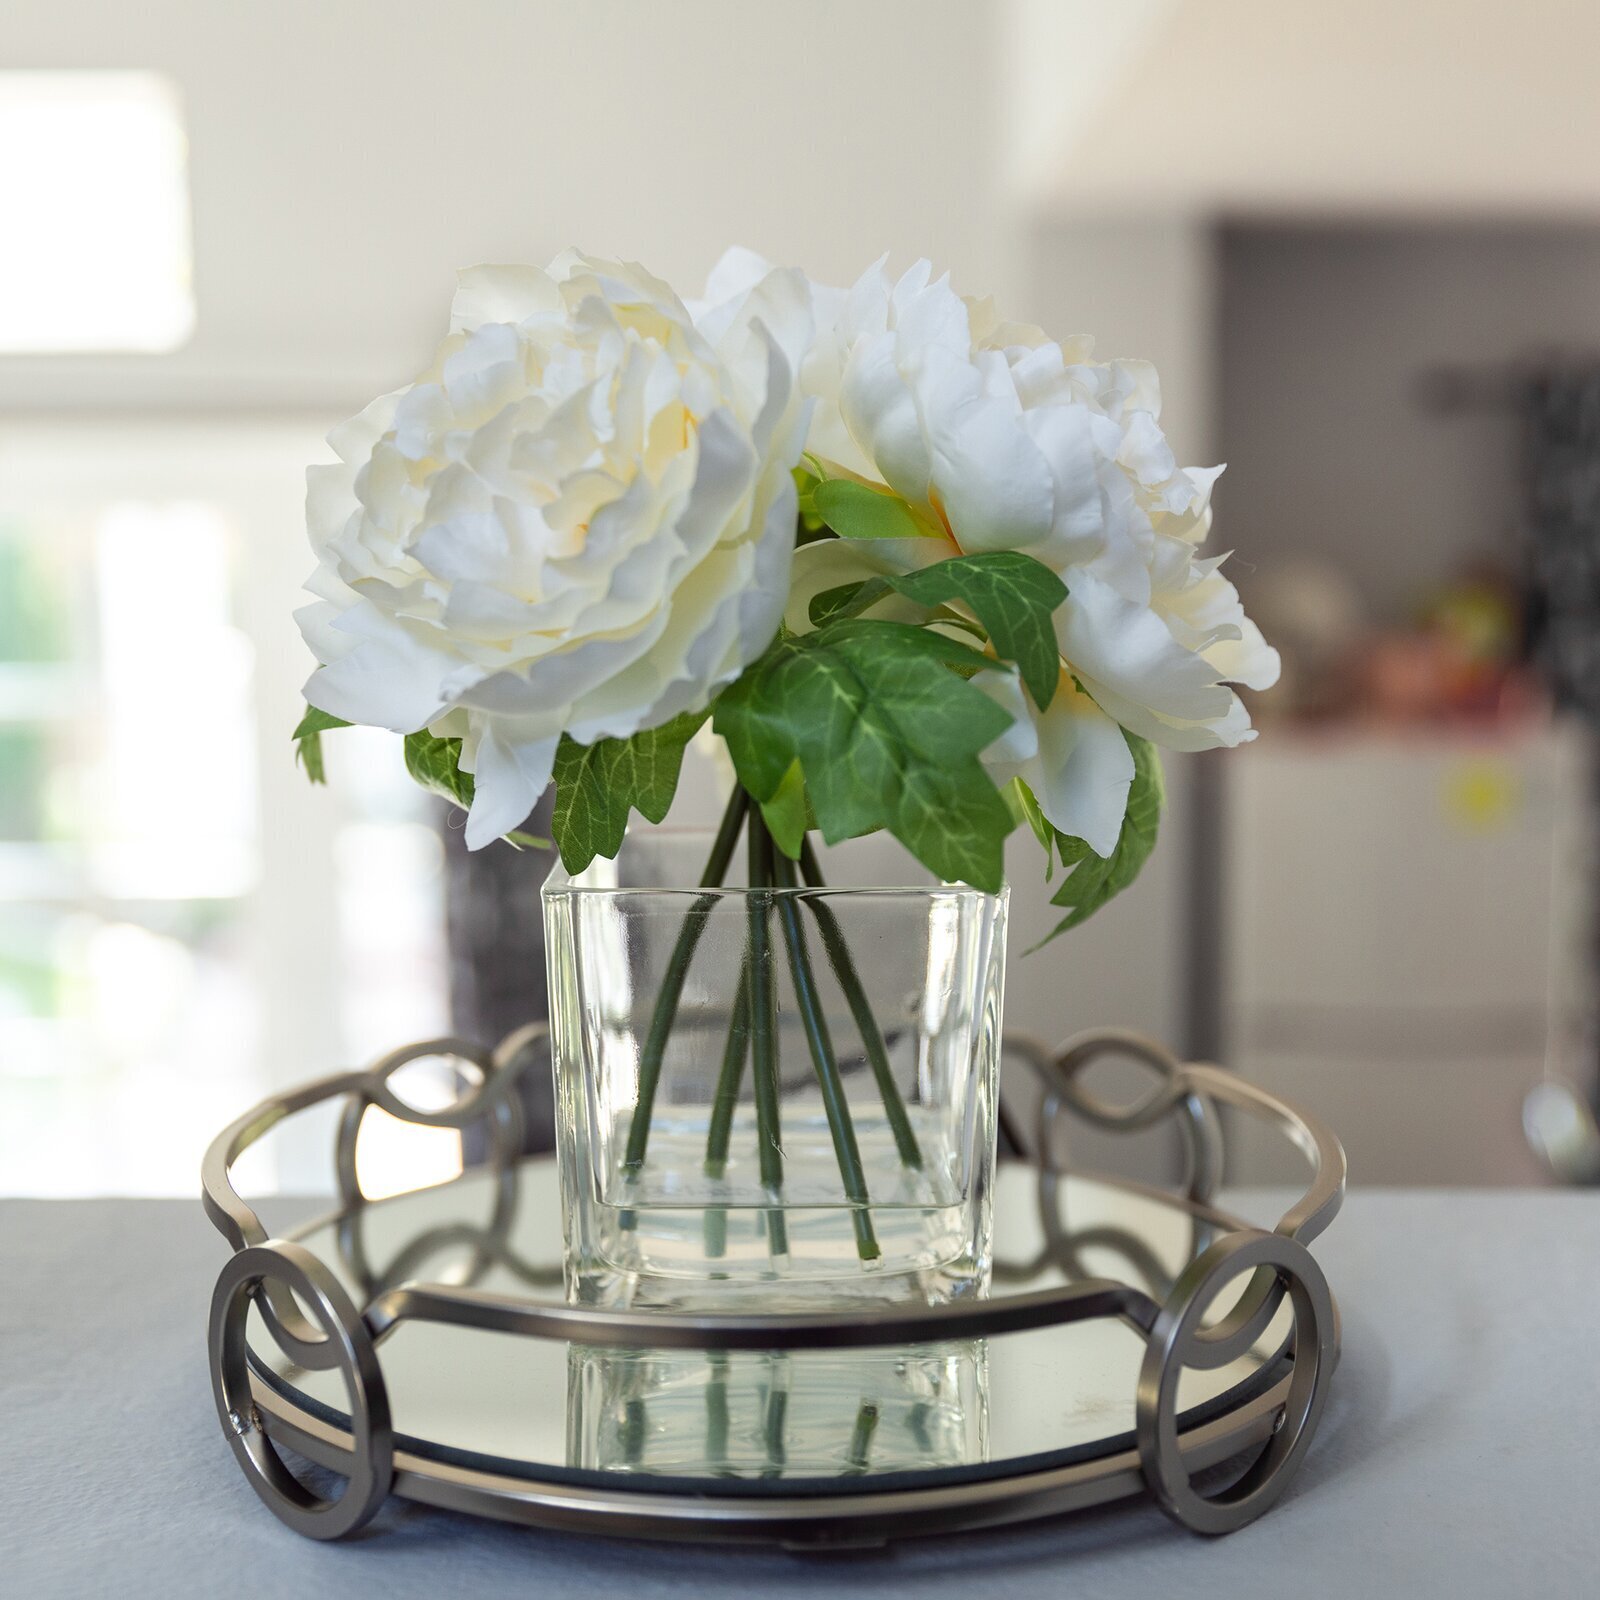 Silk flower arrangements for dining room table 